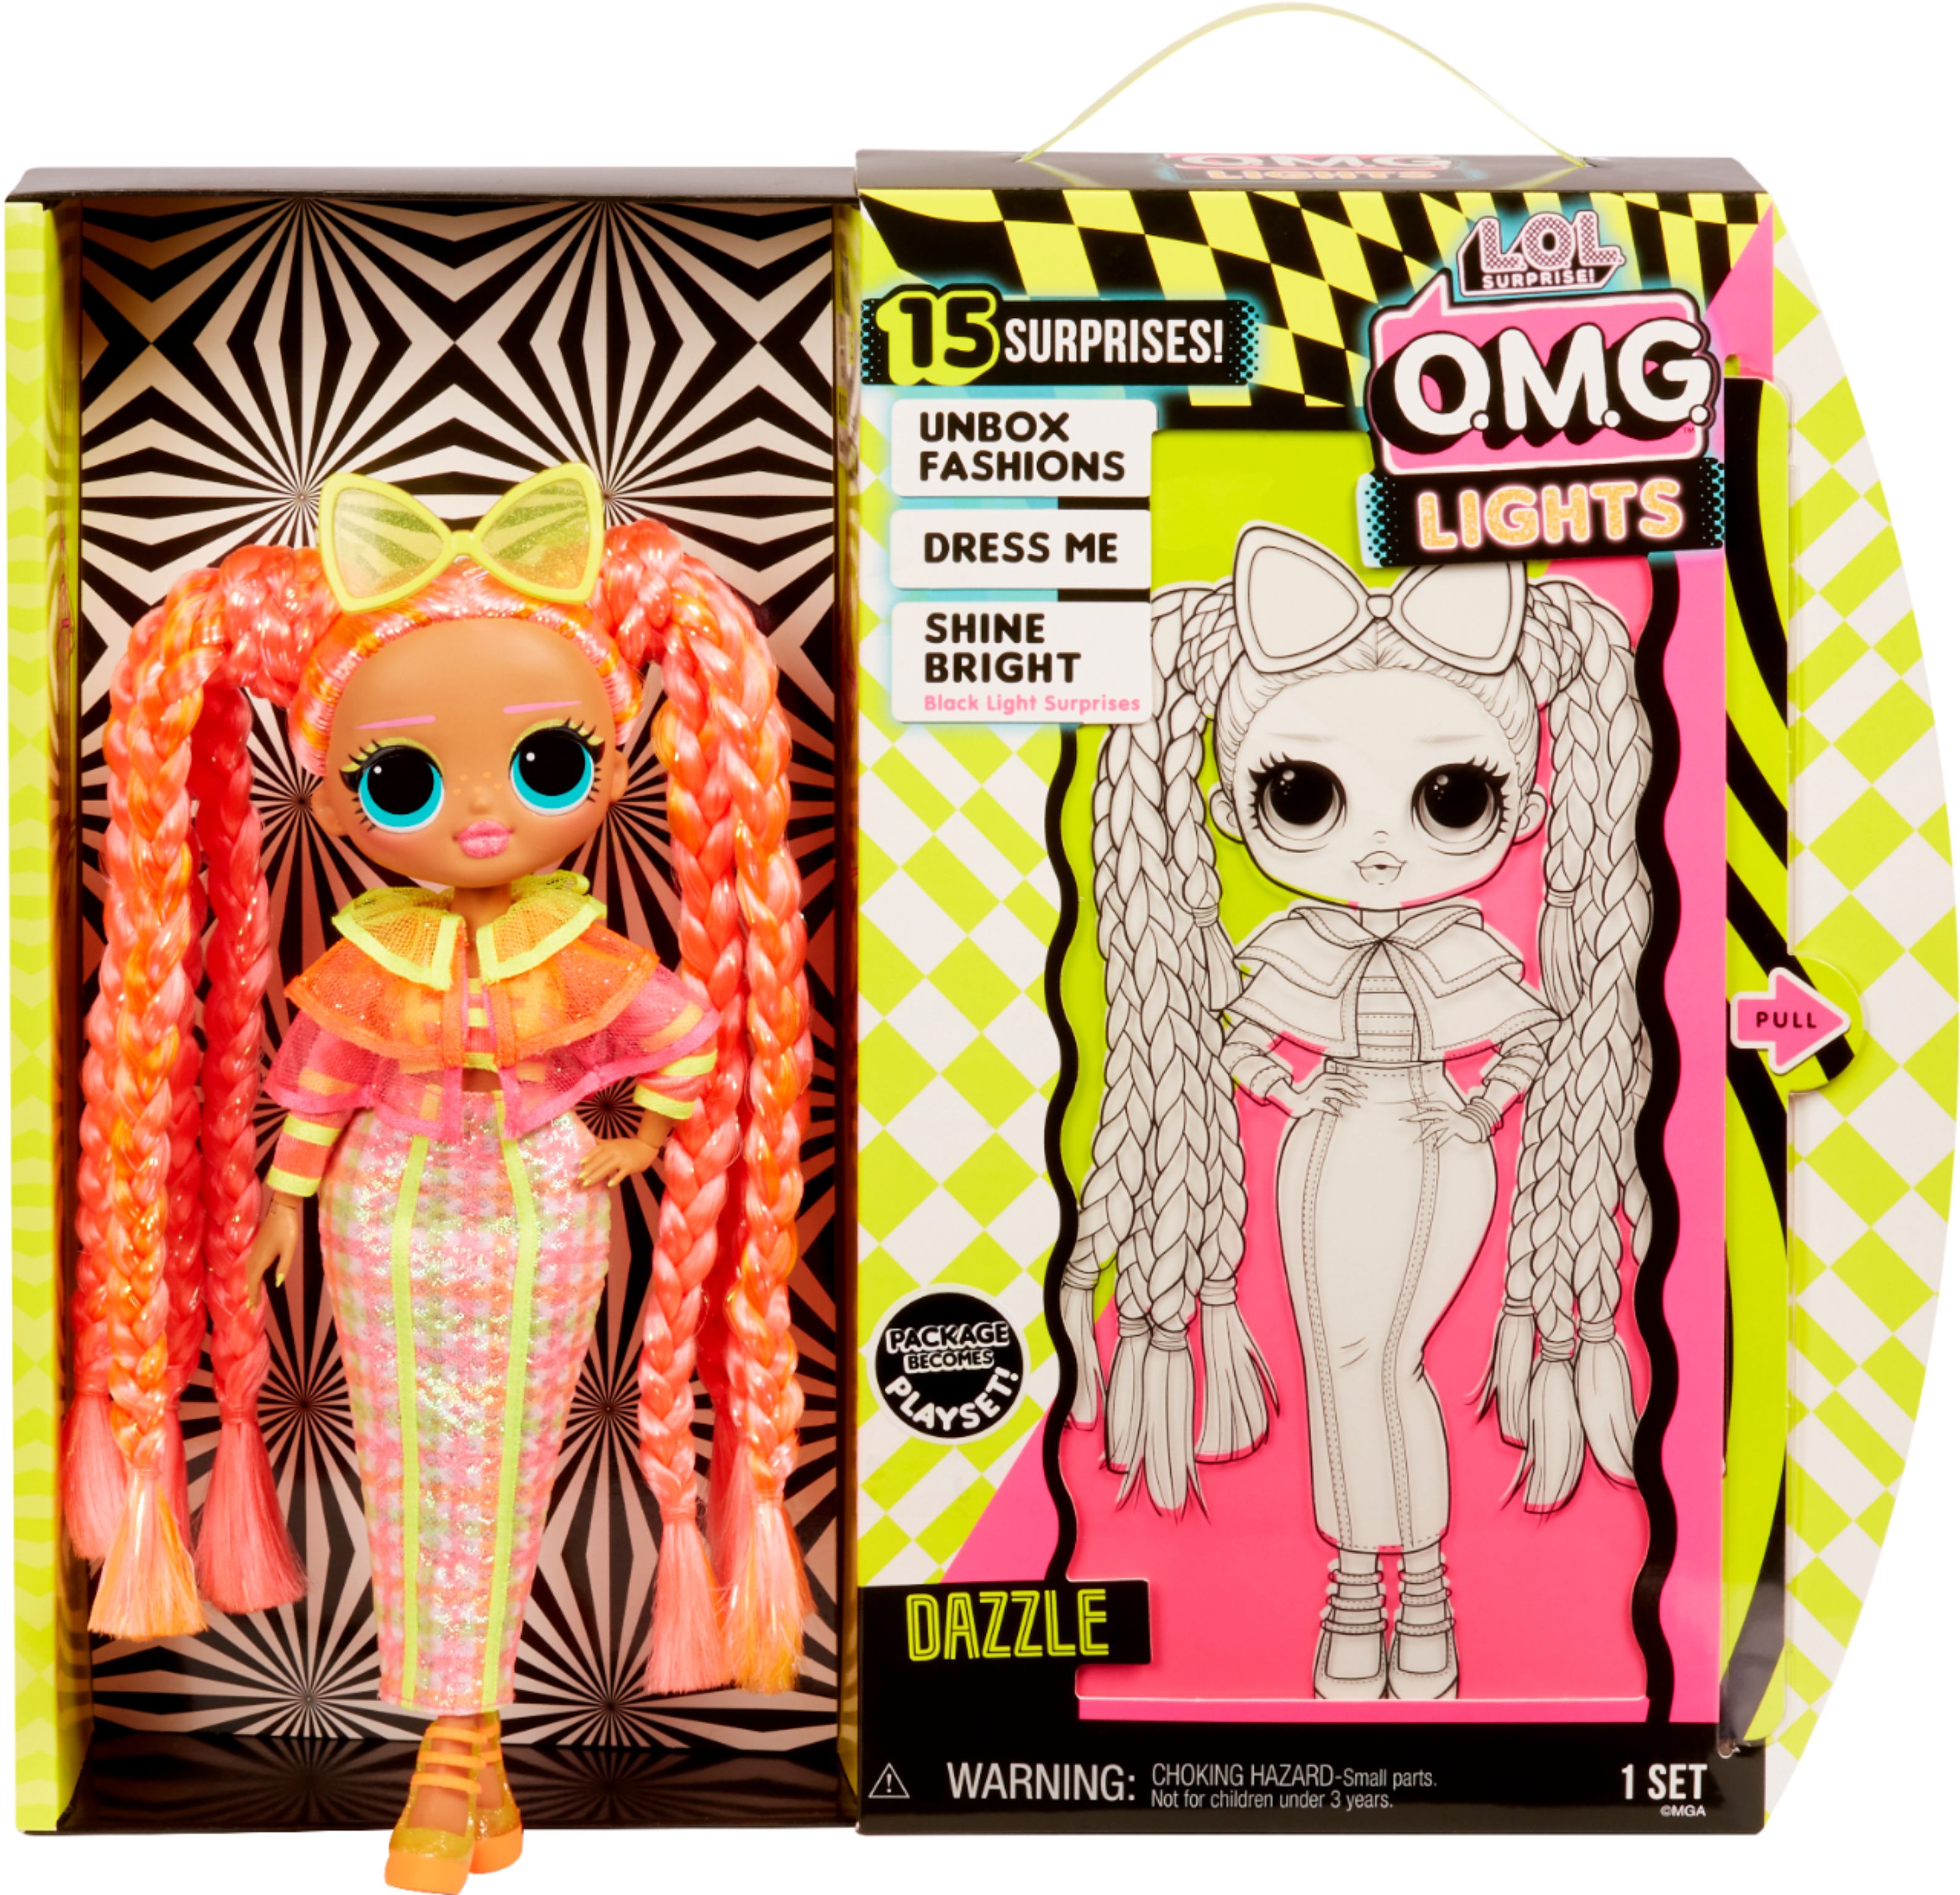 OMG Lights Dazzle Fashion Doll L.O.L 565185 for sale online Surprise 